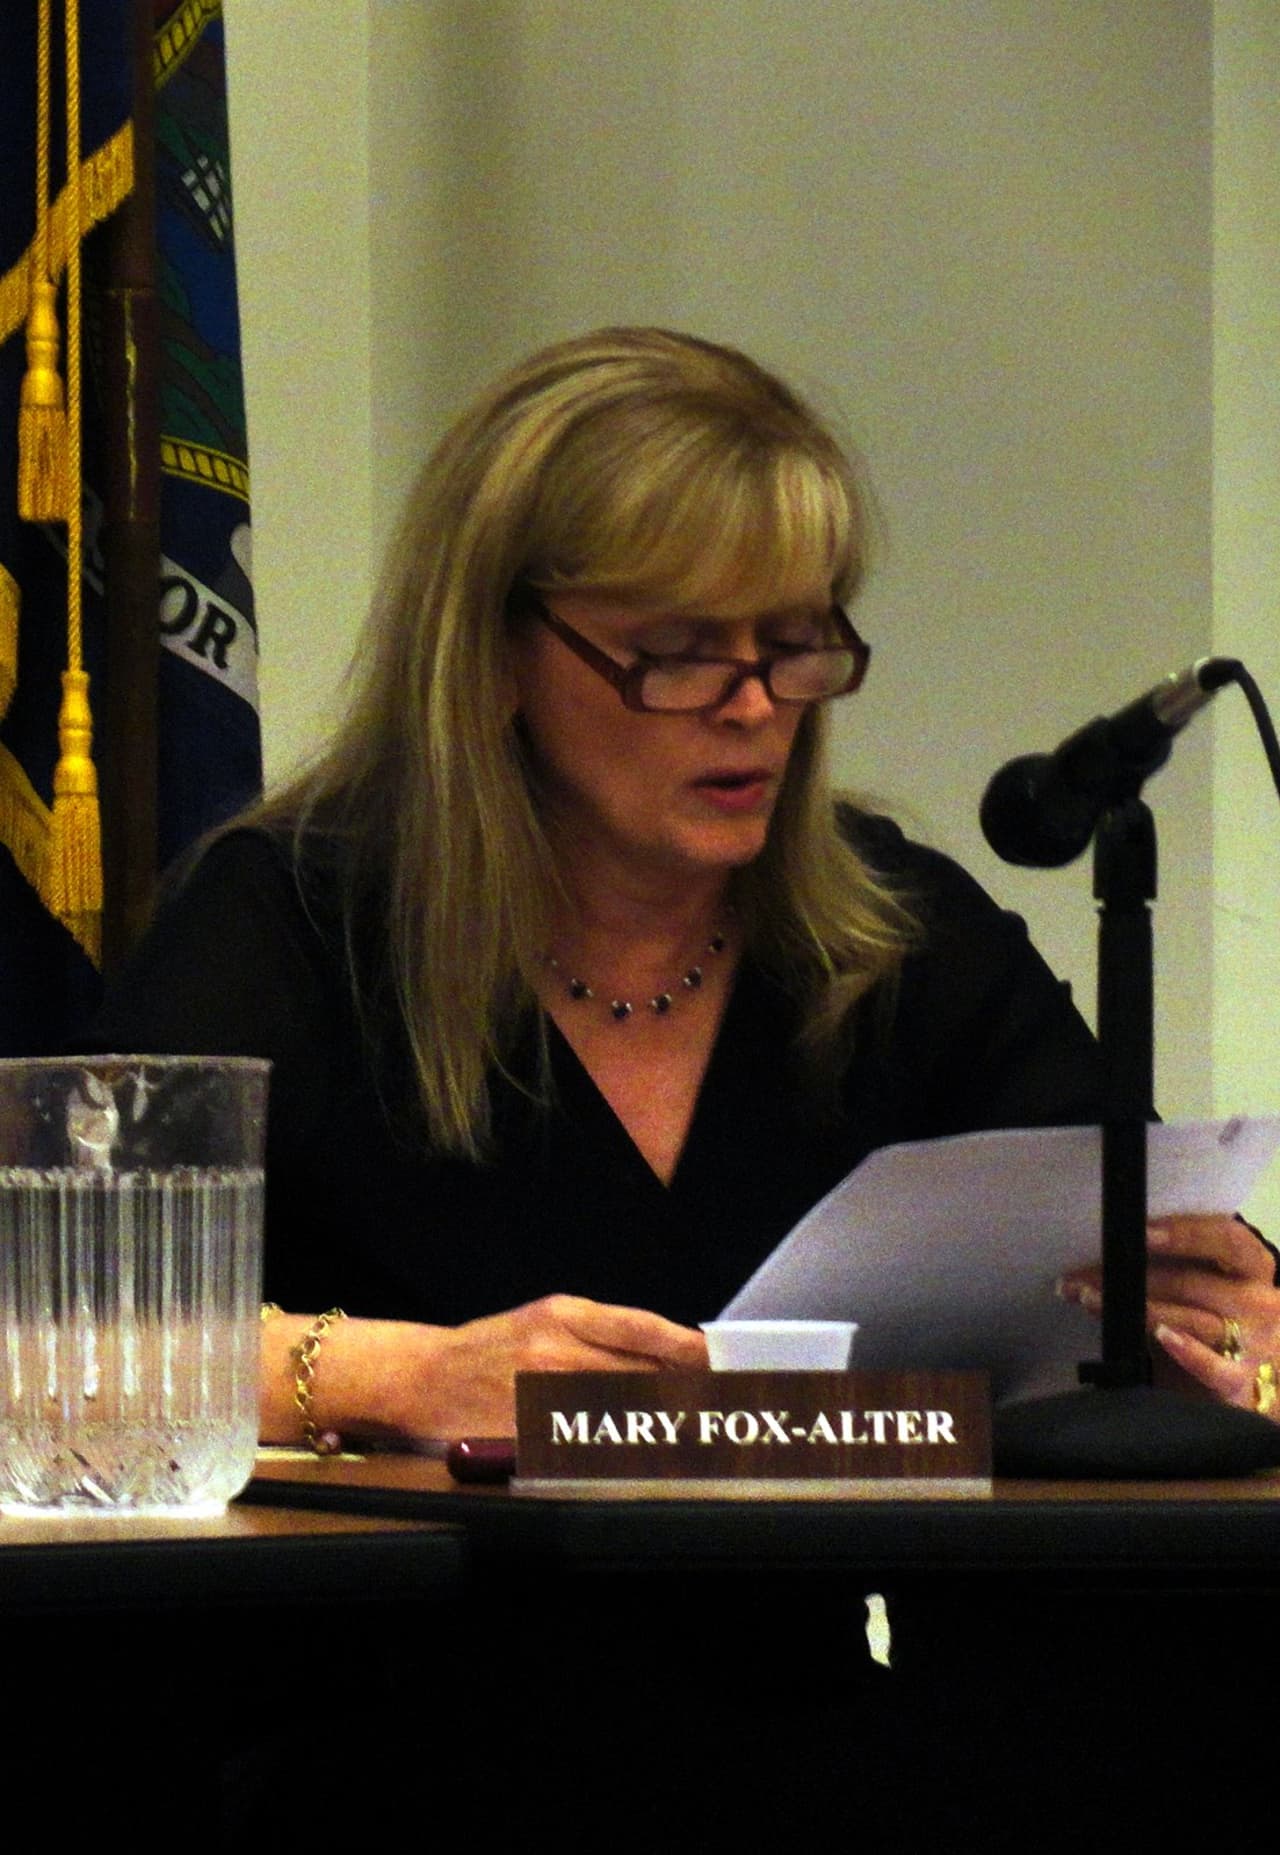 The Pleasantville Superintendent Mary Fox-Alter